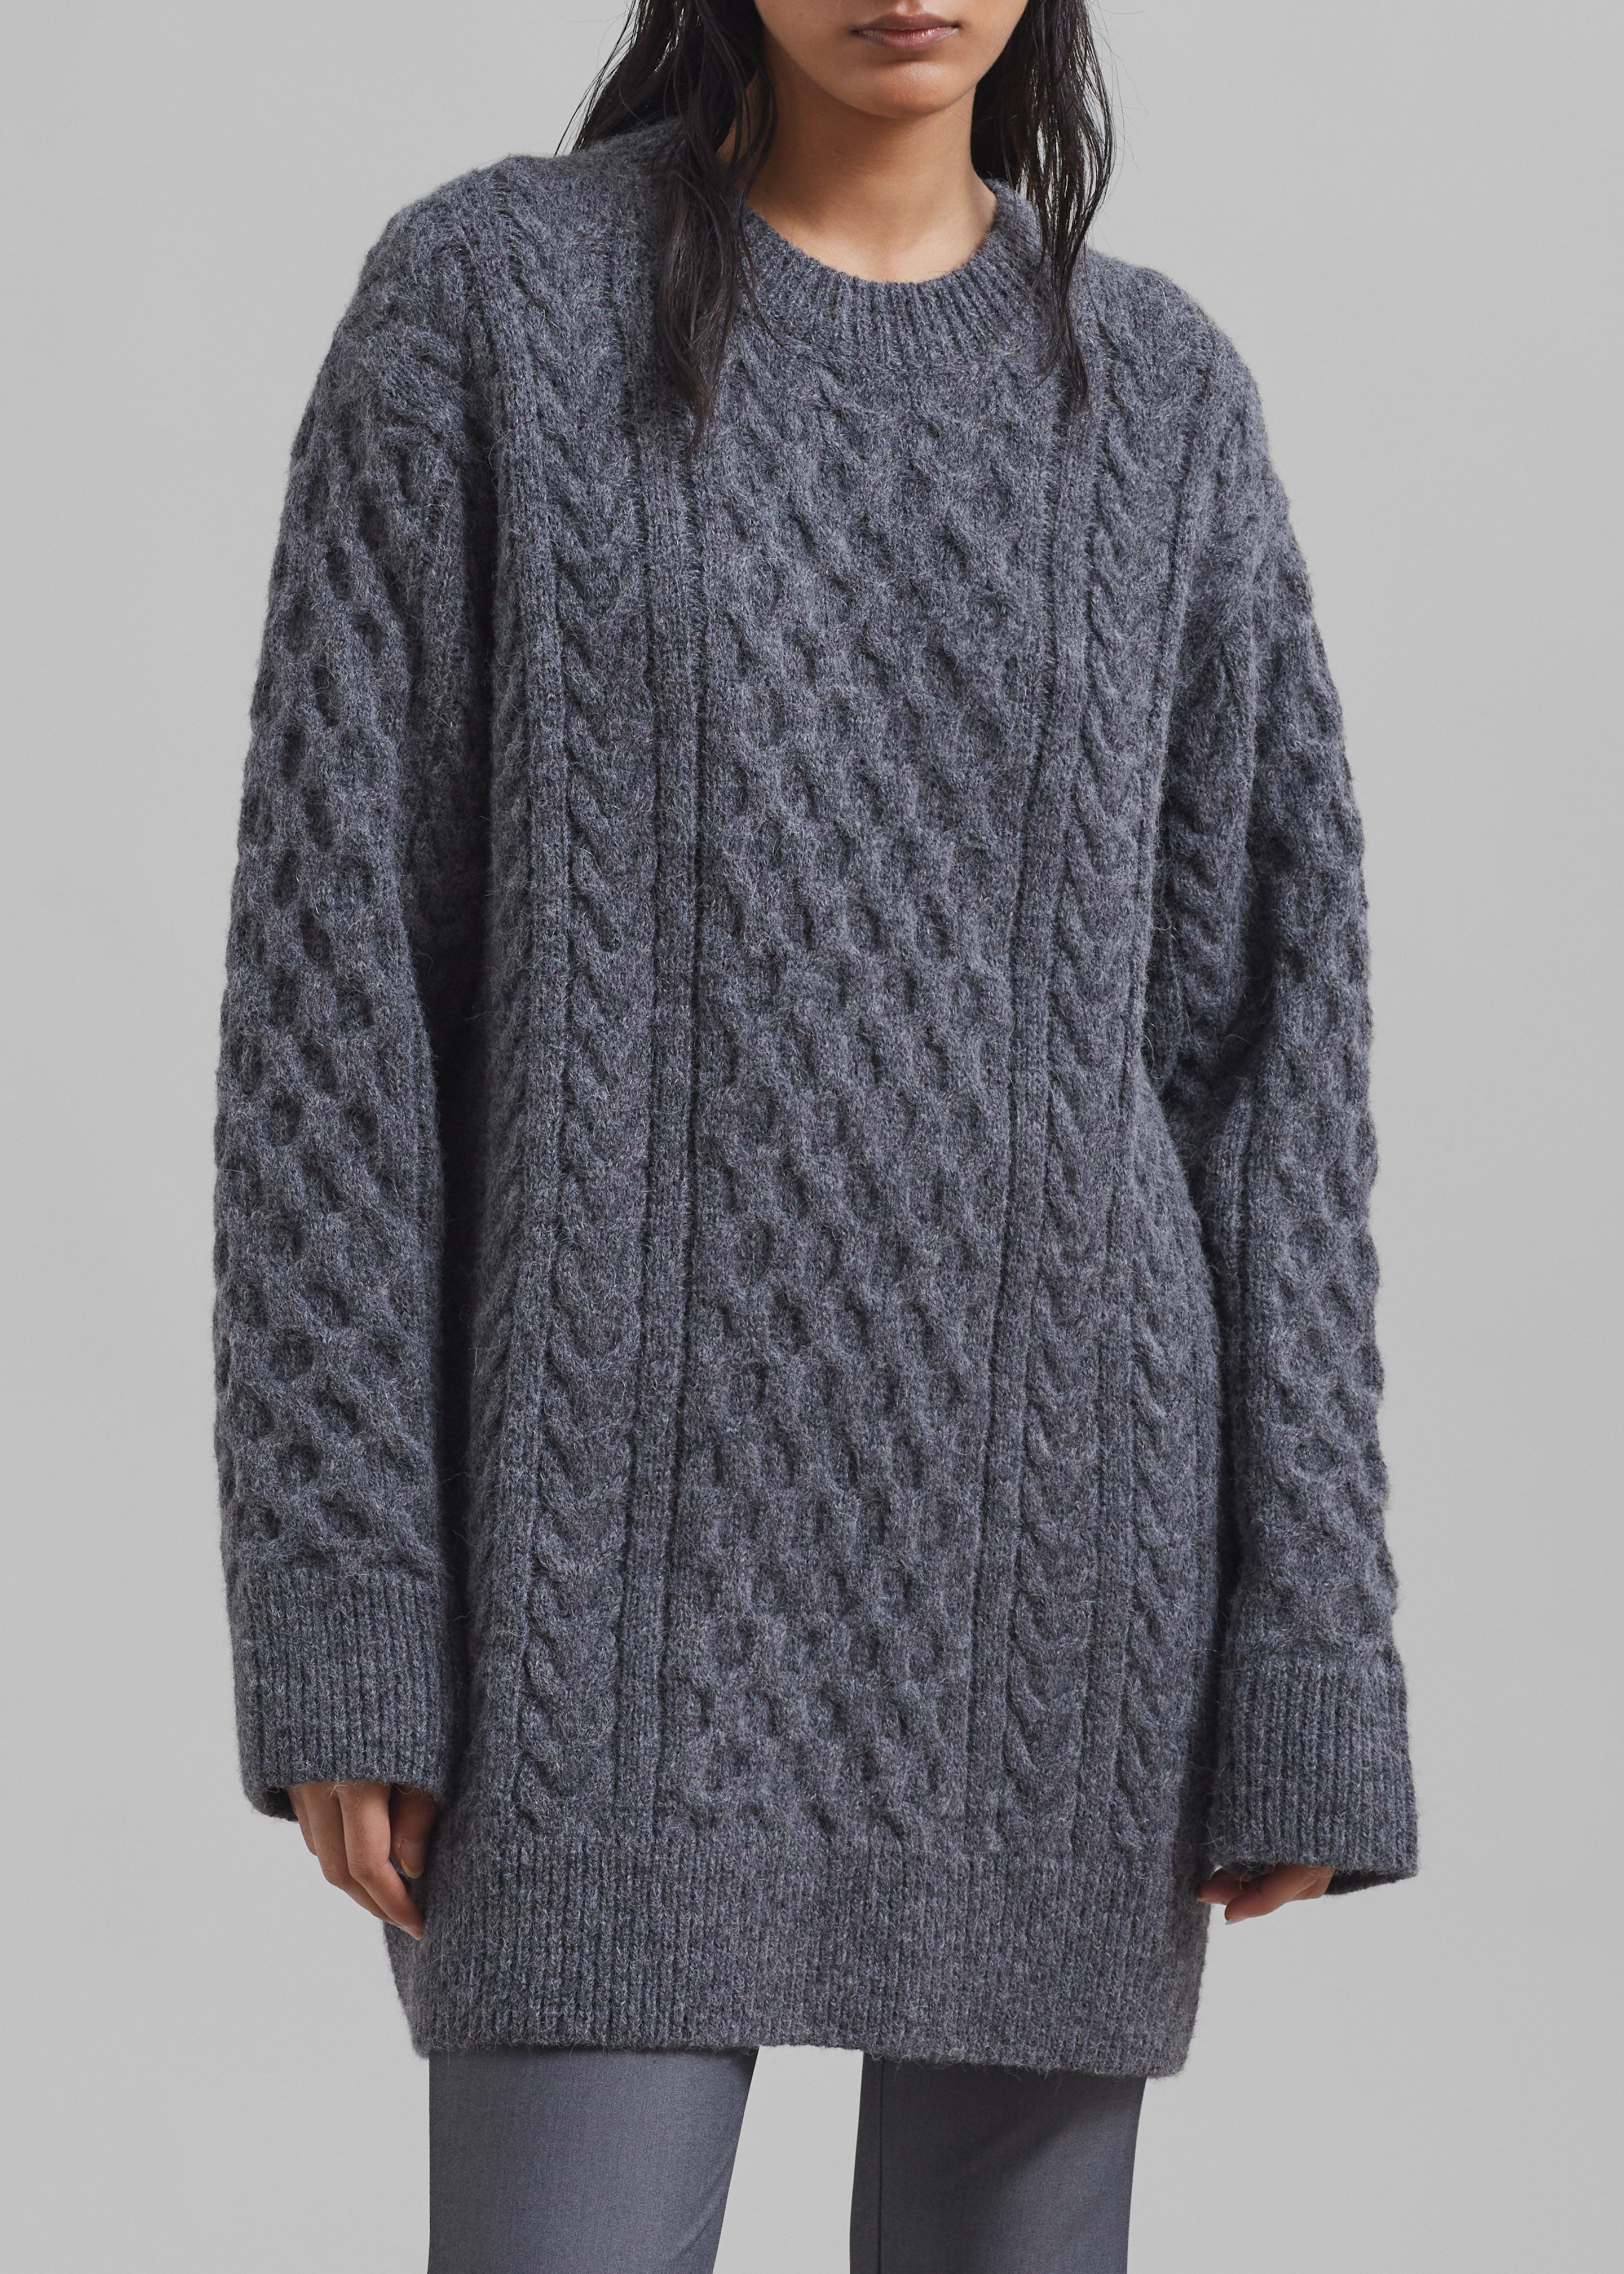 Leighton Braided Knit Sweater - Grey - 5